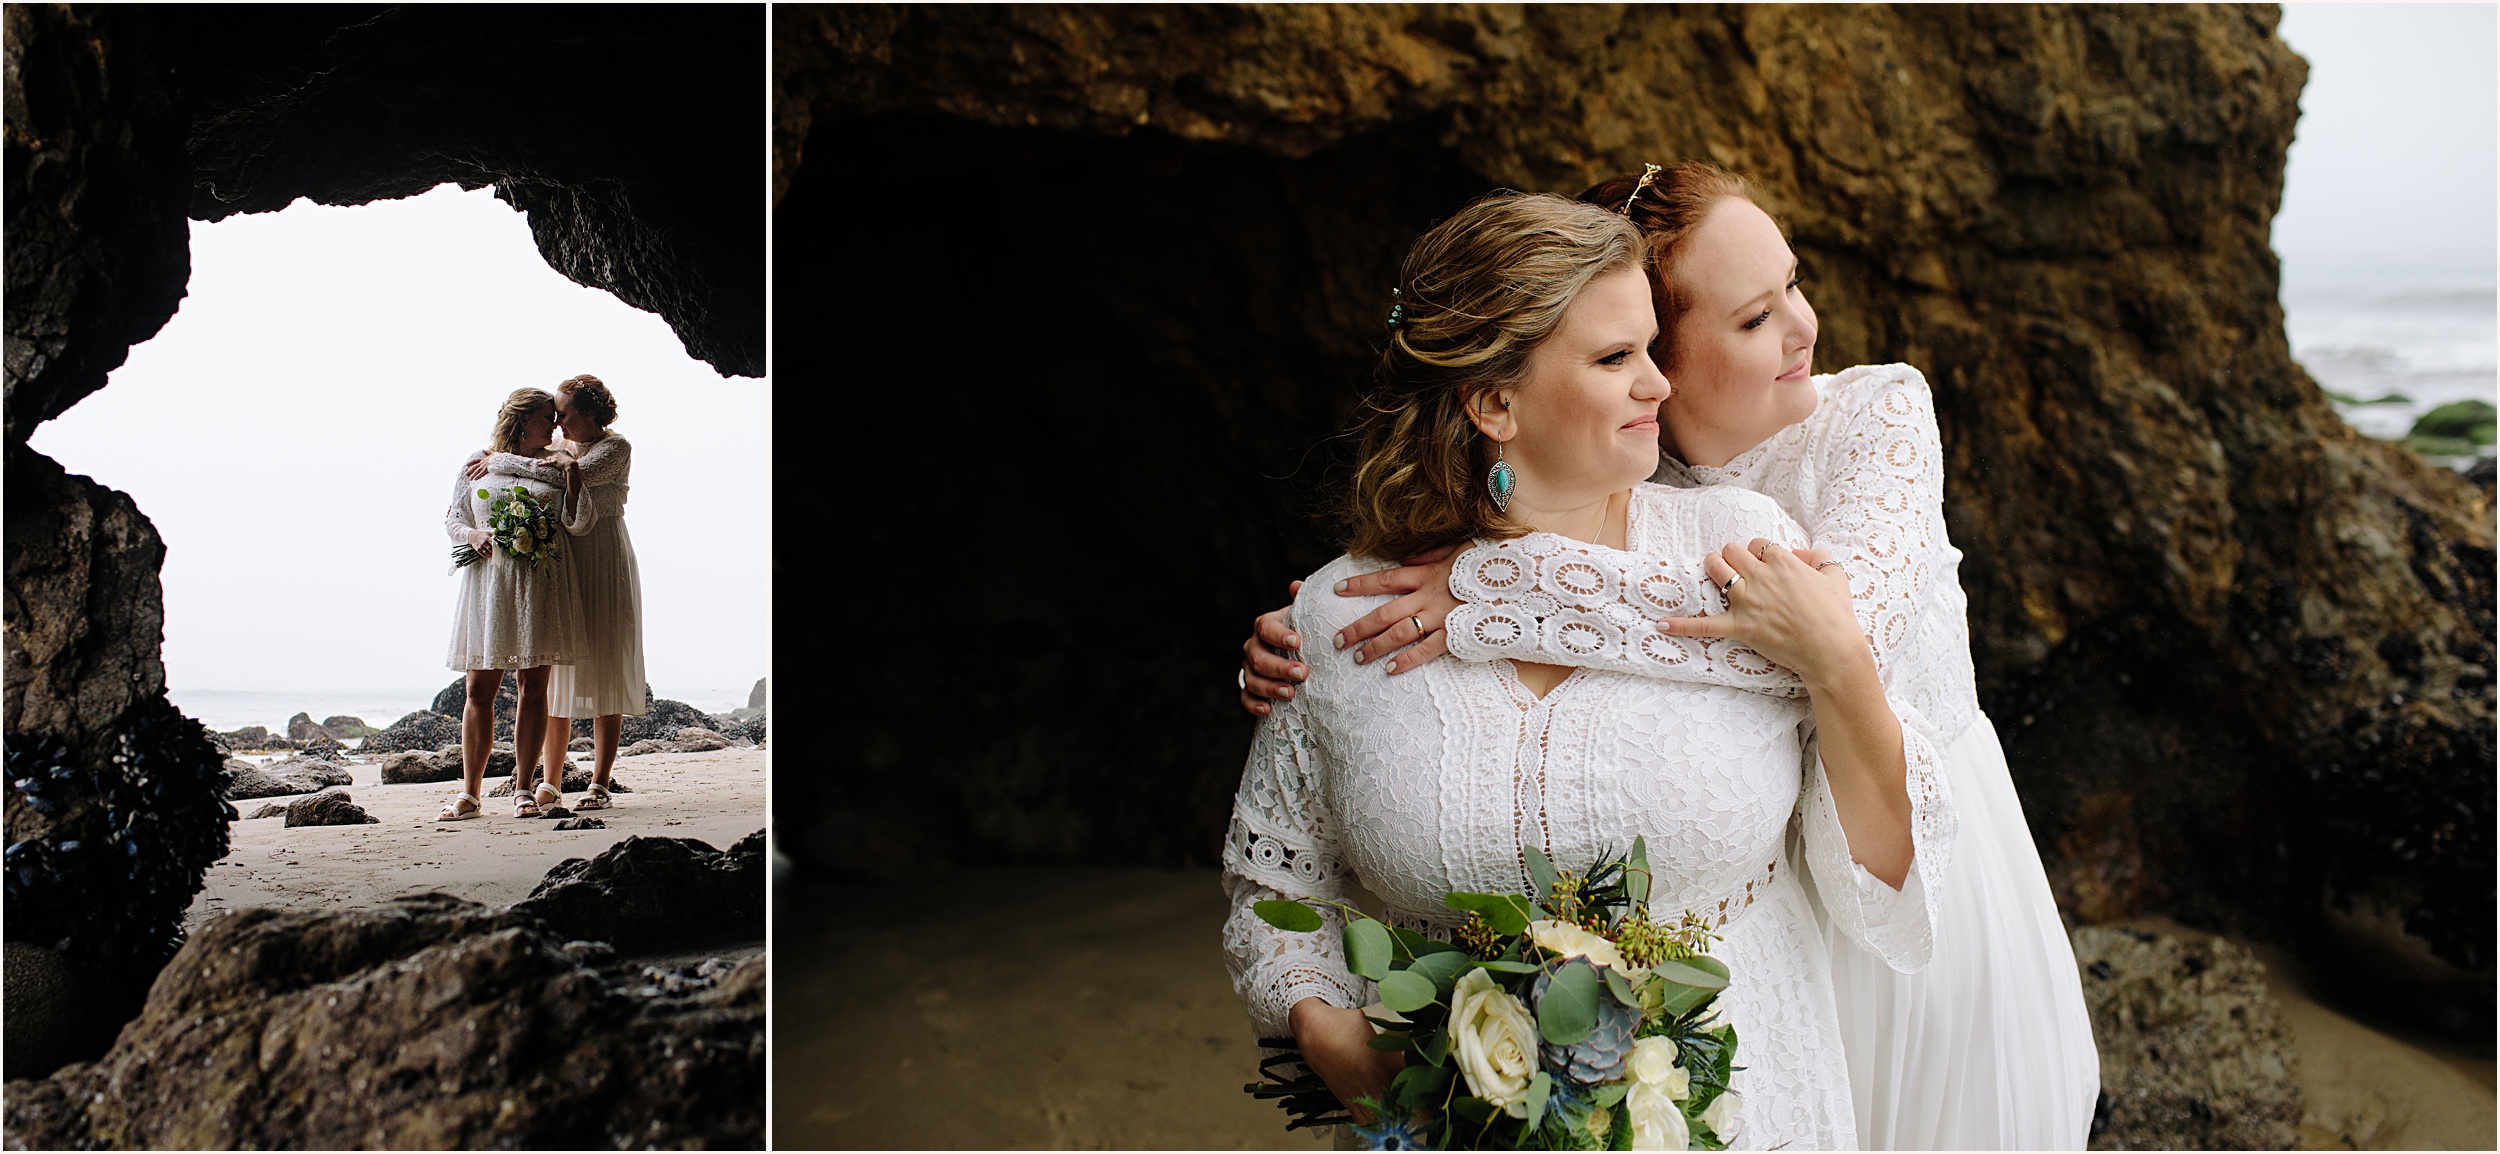 Steff-and-Brittni-Malibu-Elopement-Photographer-Malibu-elopement-locations-Malibu-elopement-packages_0001 El Matador Beach Elopement Adventure In Sea Caves